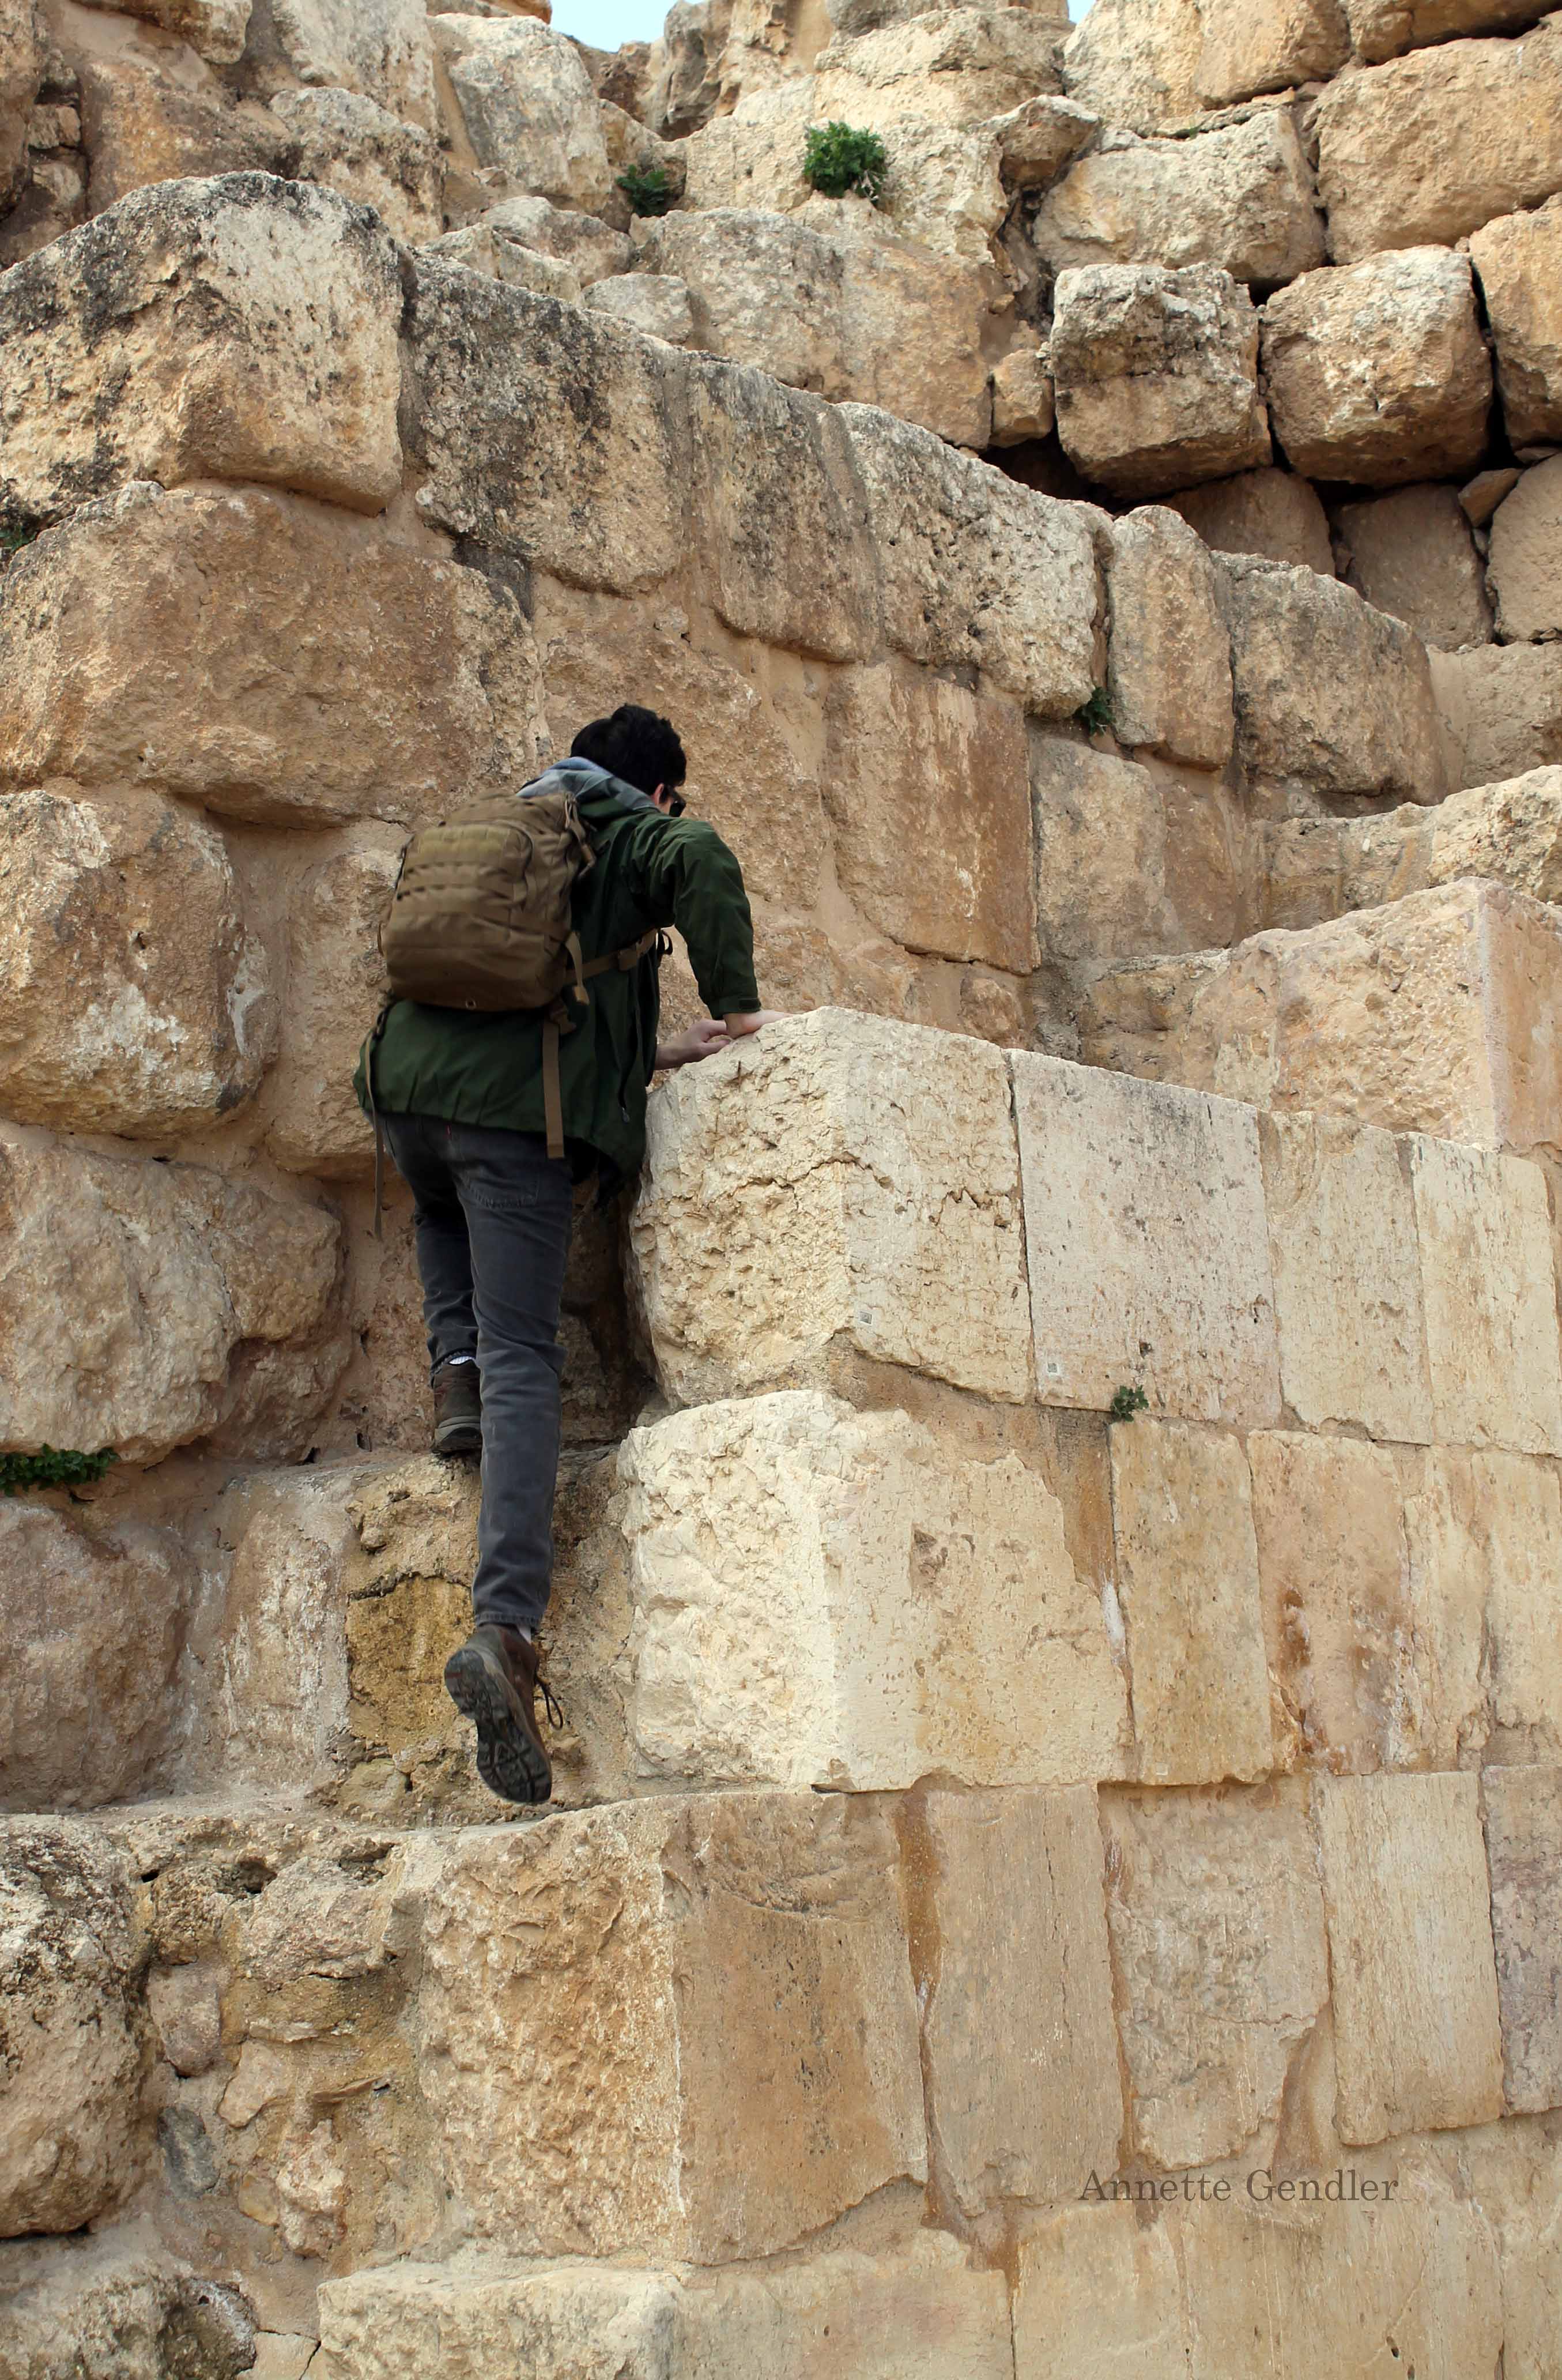 A young man climbs the Temple of Zeus ruins in Jerash, Jordan